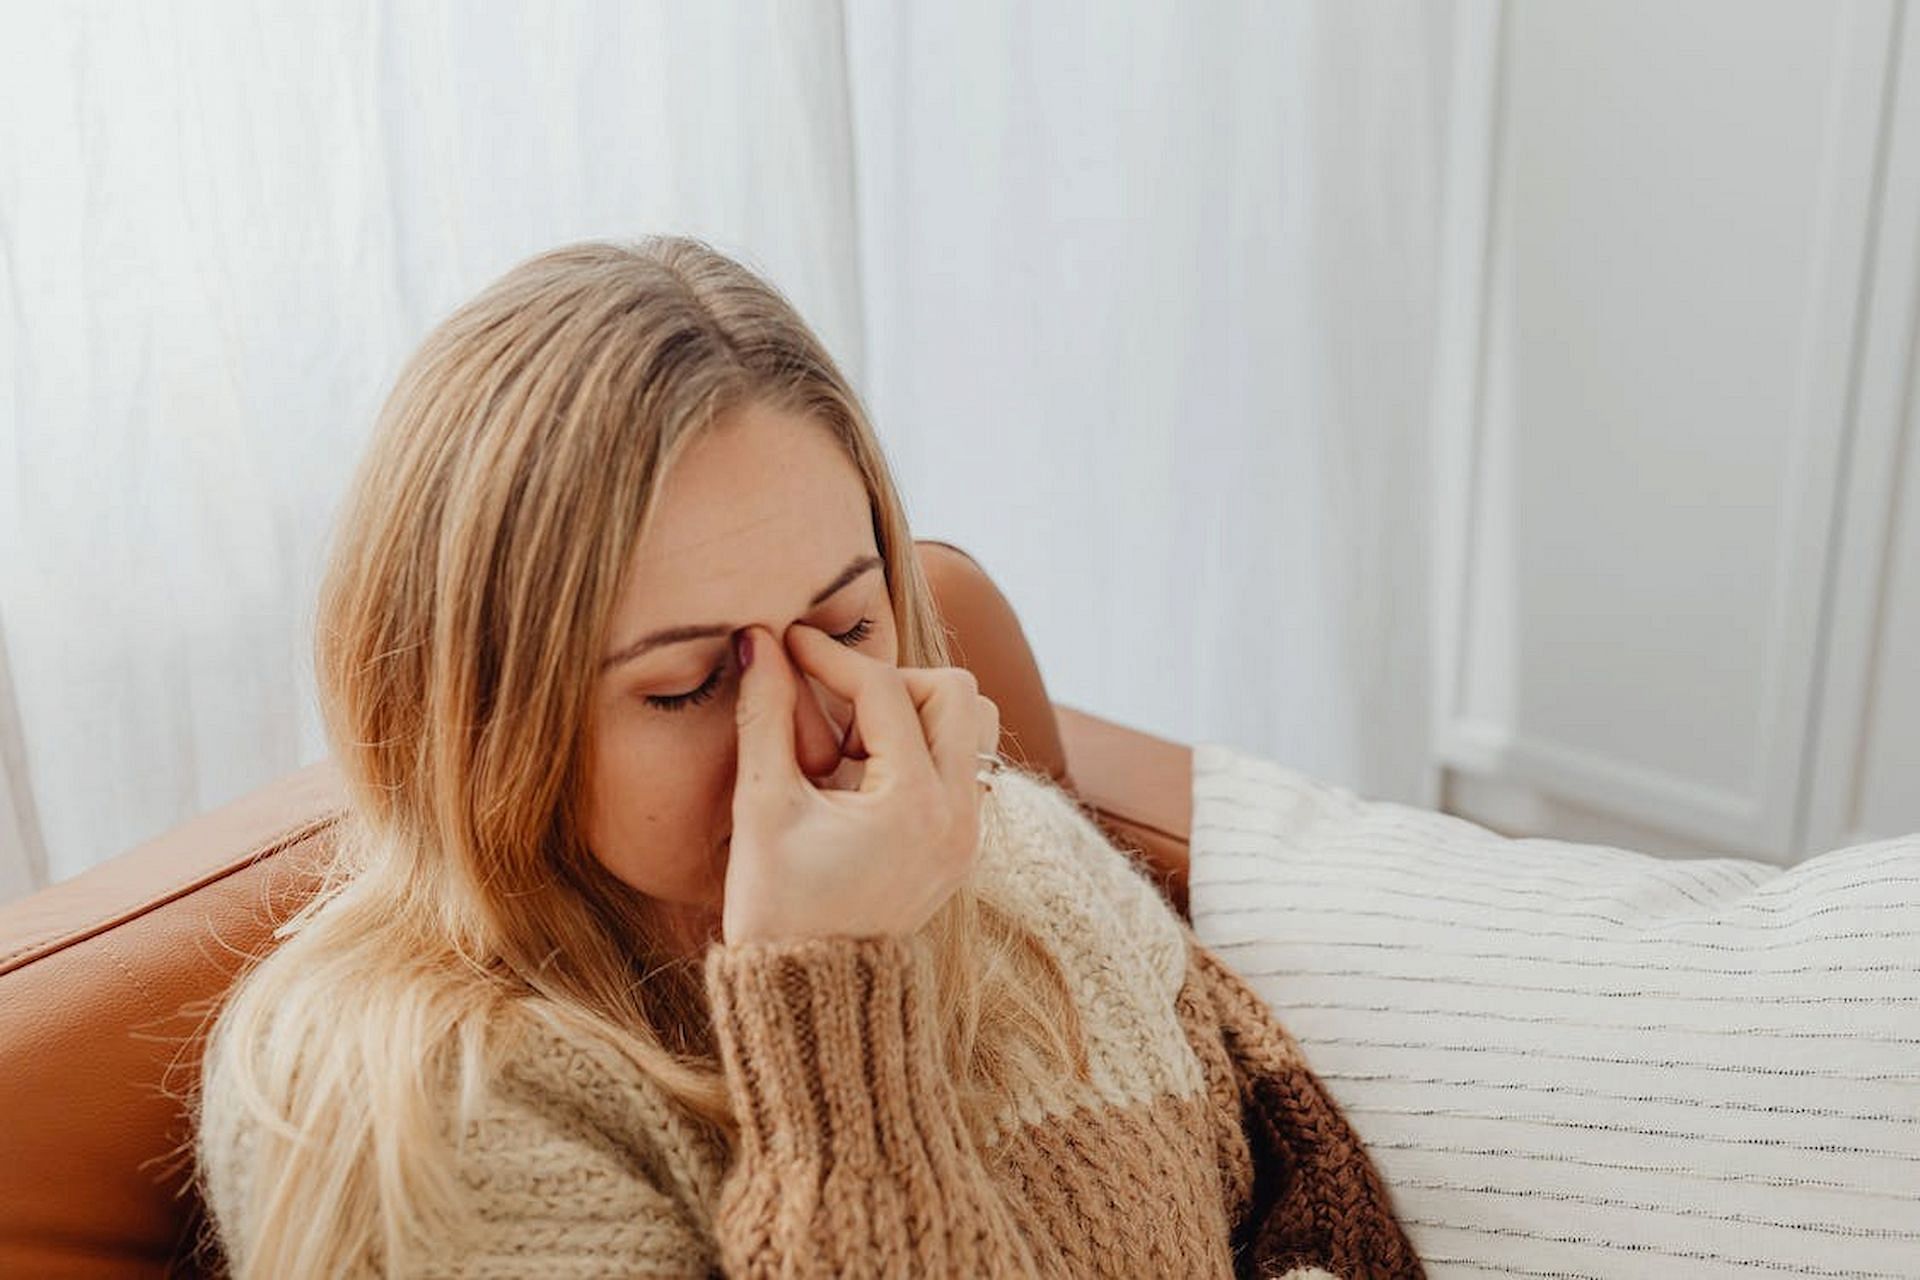 Steam inhalation can help bring comfort to the symptoms of sinus infections (Image via pexels/Karolina Grabowska)